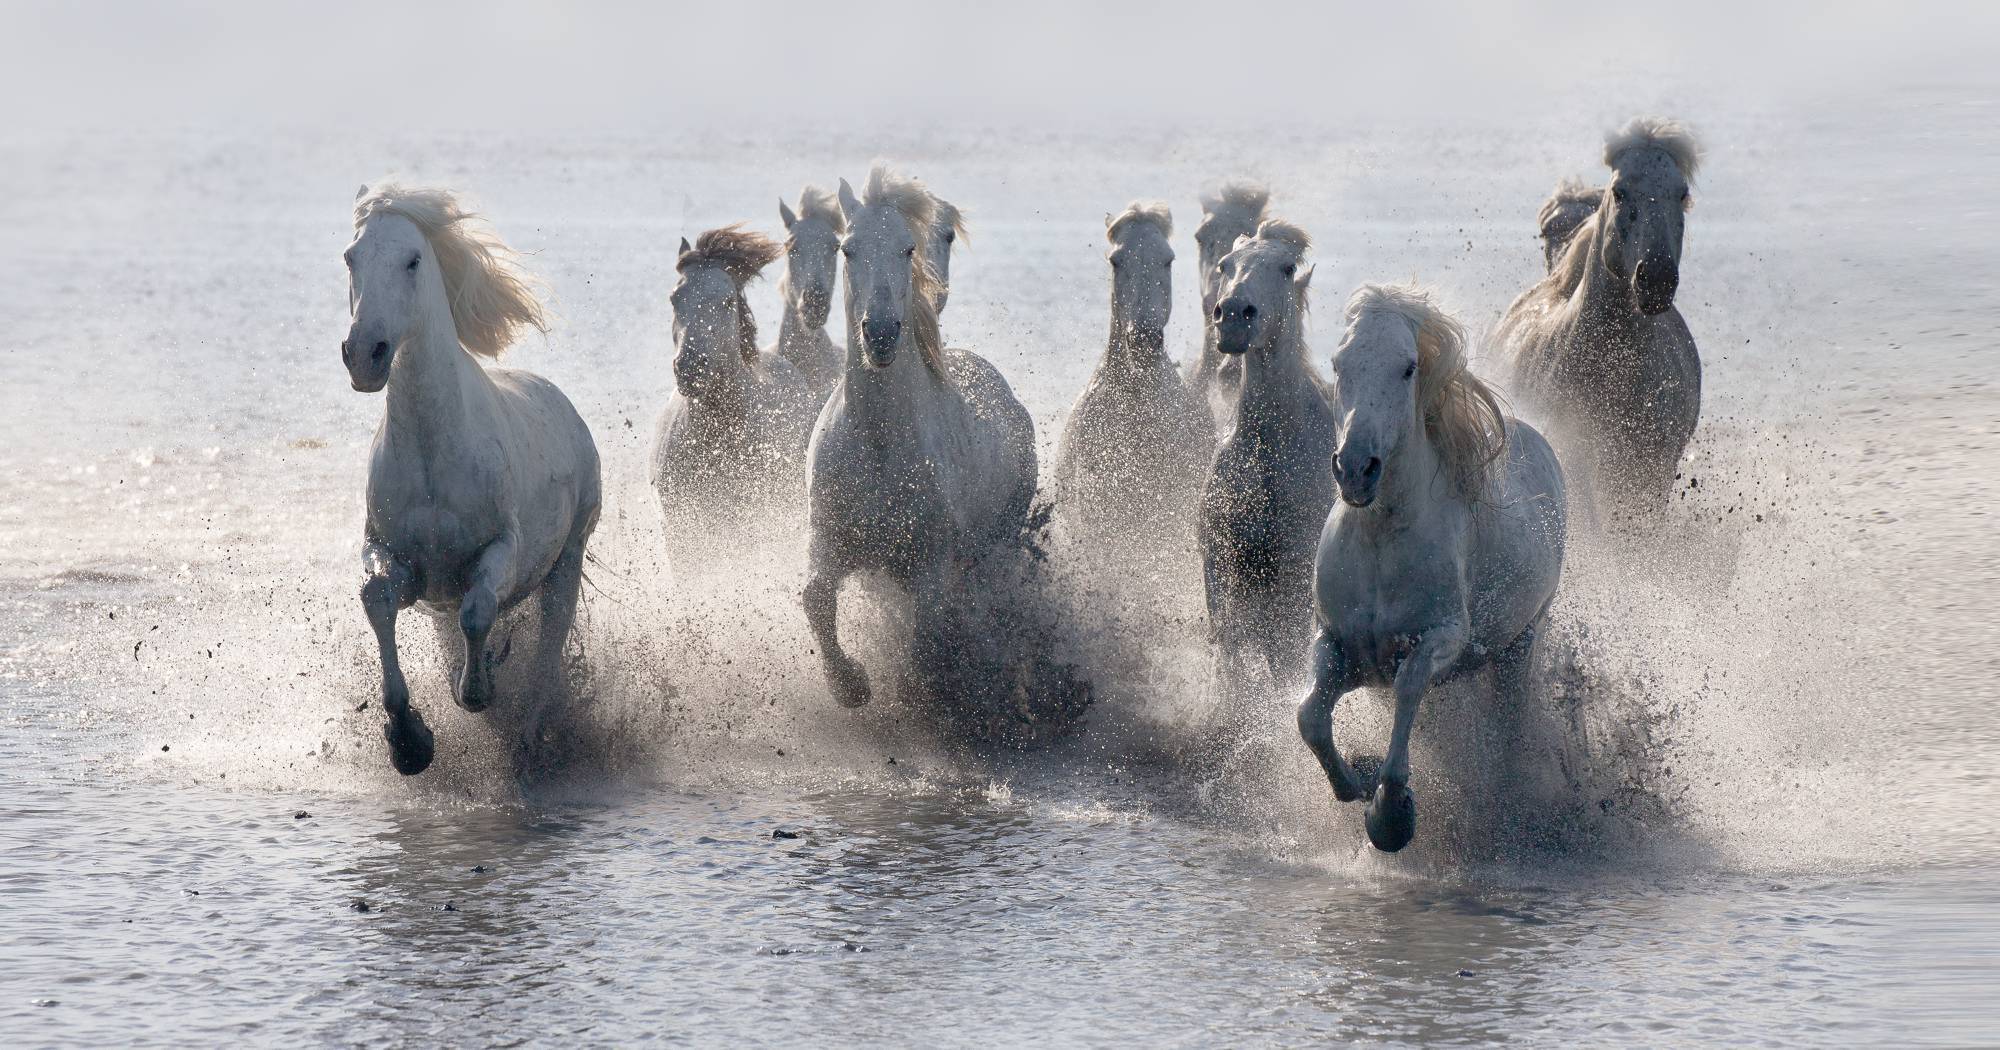 tilestwra.gr | Λευκά άλογα φωτογραφίζονται να τρέχουν στη θάλασσα! Η αίσθηση της ελευθερίας στο αποκορύφωμά της… 